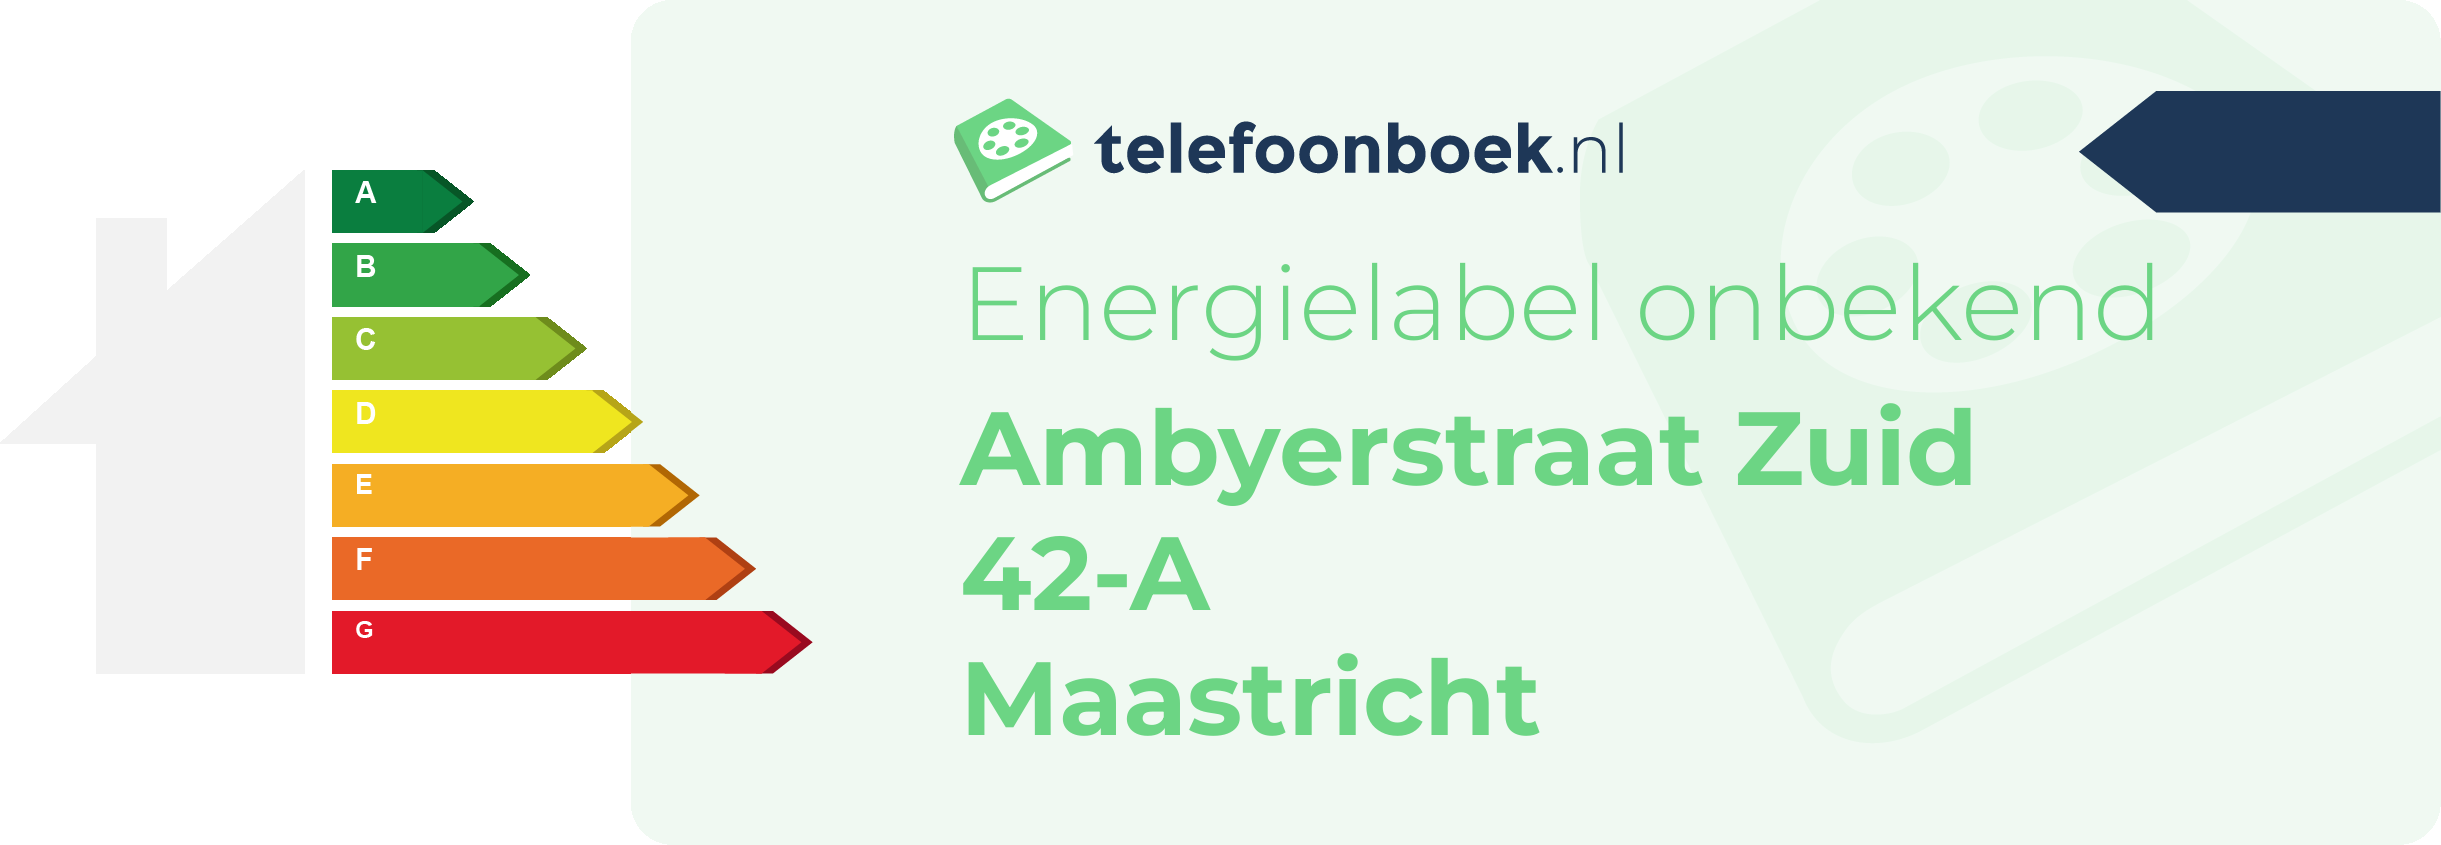 Energielabel Ambyerstraat Zuid 42-A Maastricht